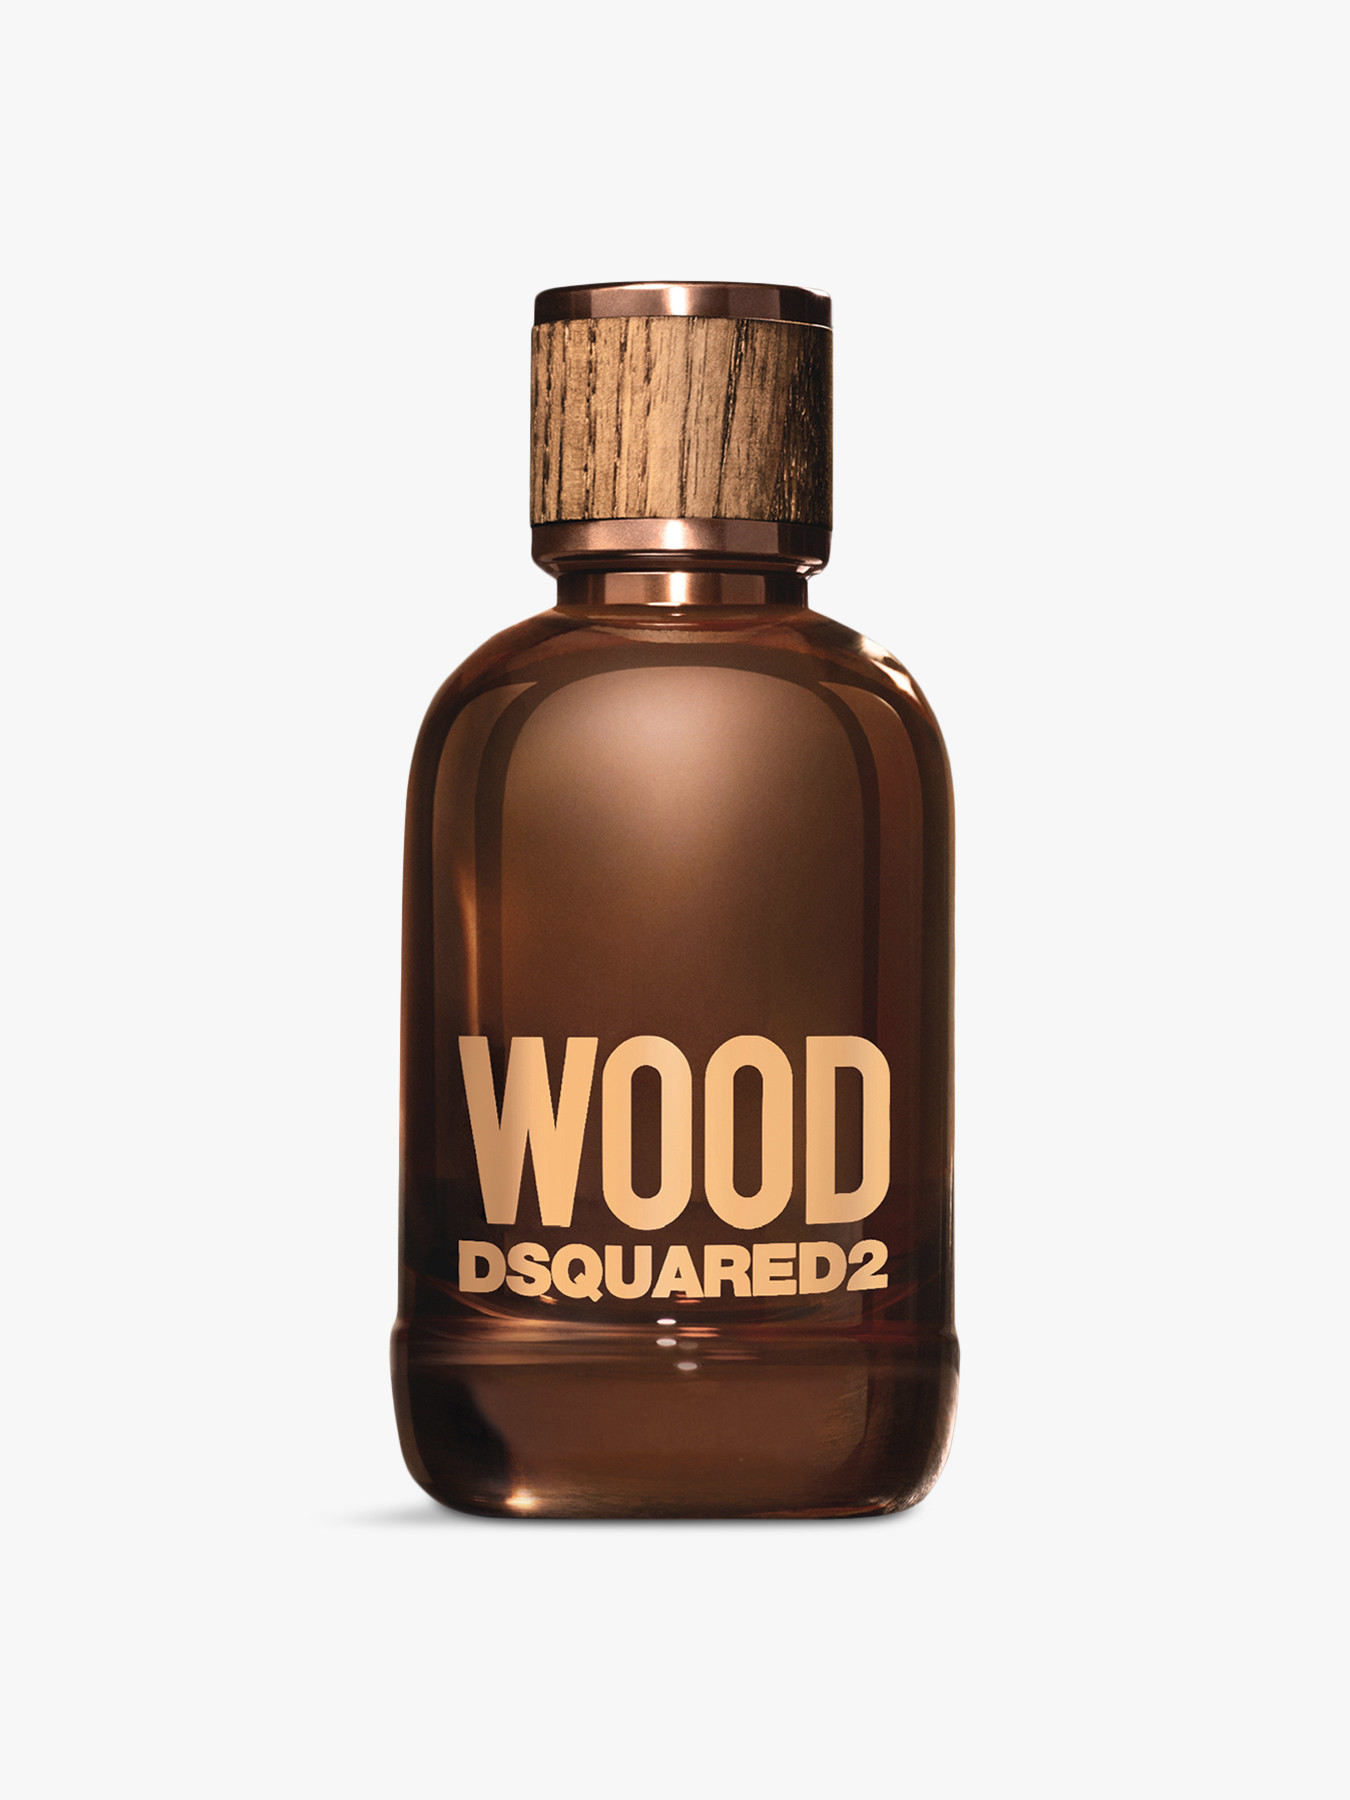 dsquared2 wood pour homme cologne